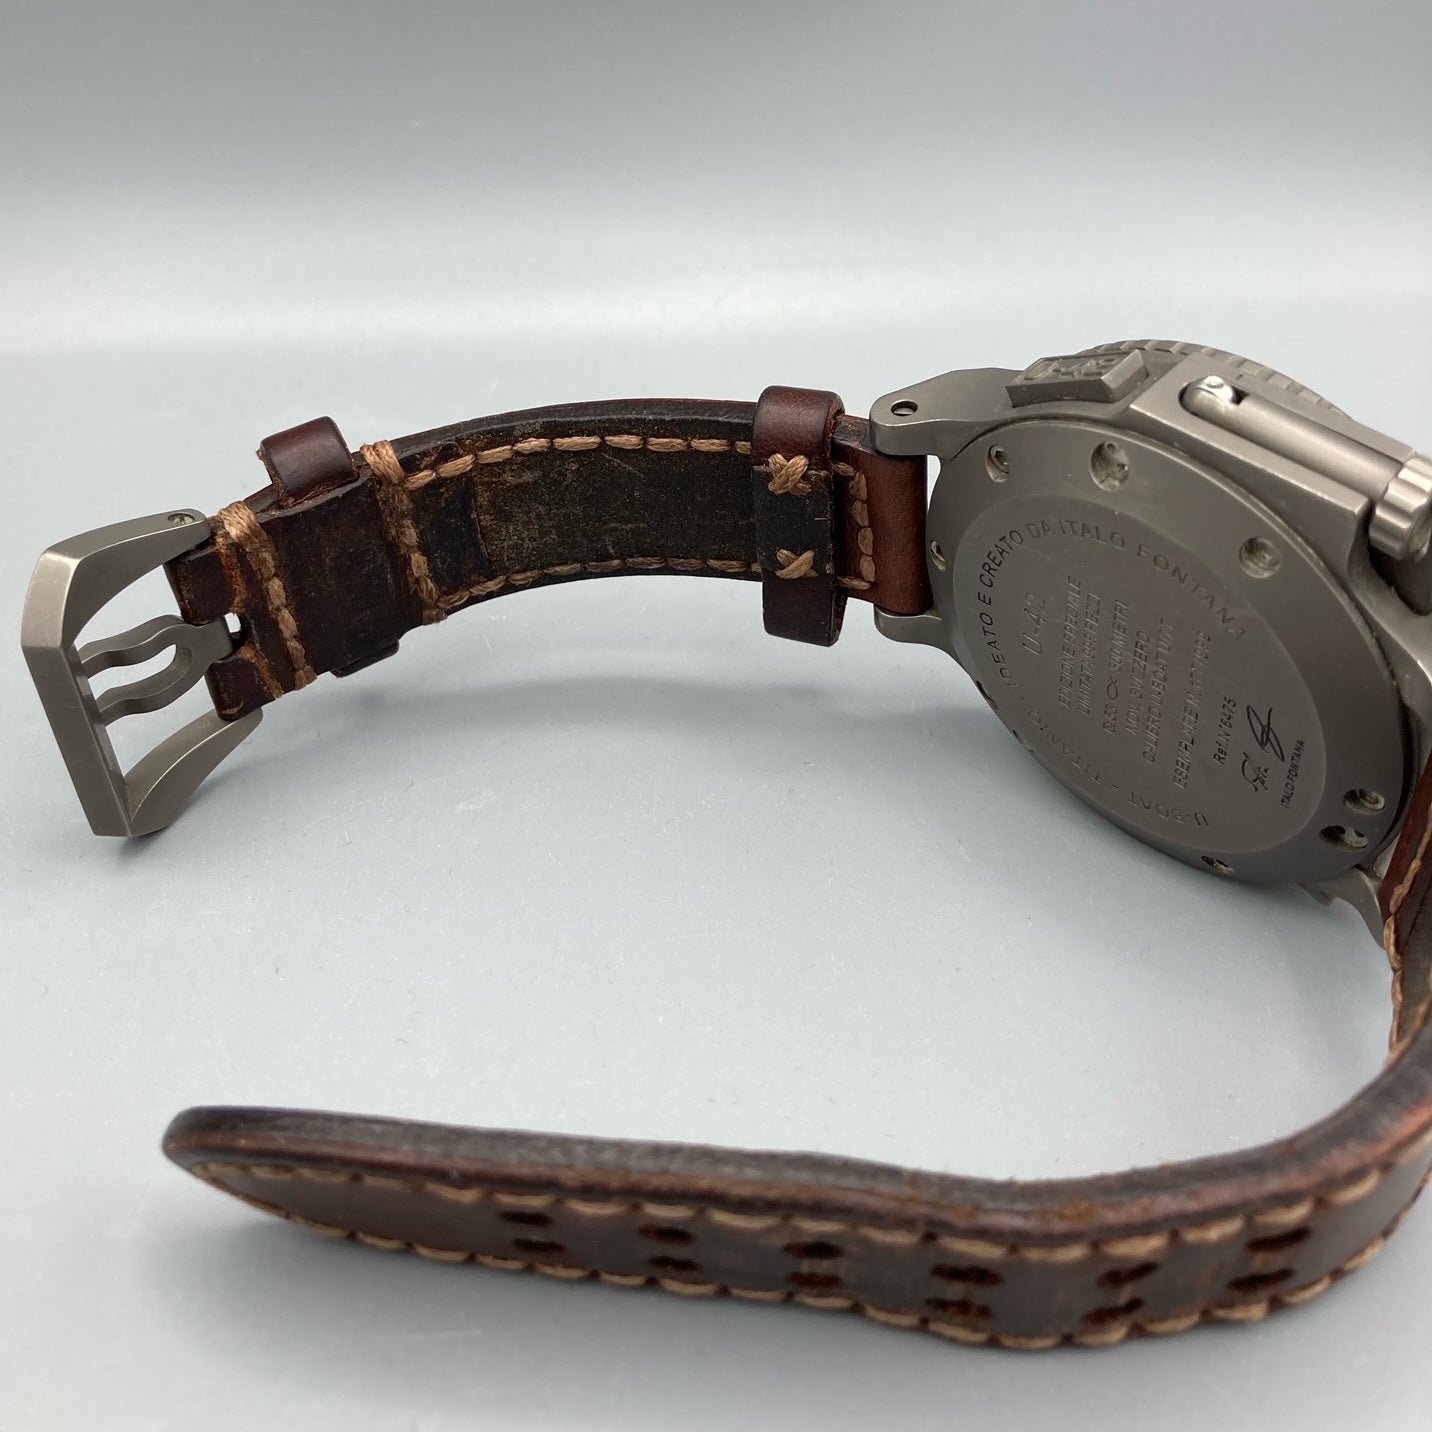 U-Boat Titanium U-42 Chronograph 53mm Watch - 6475